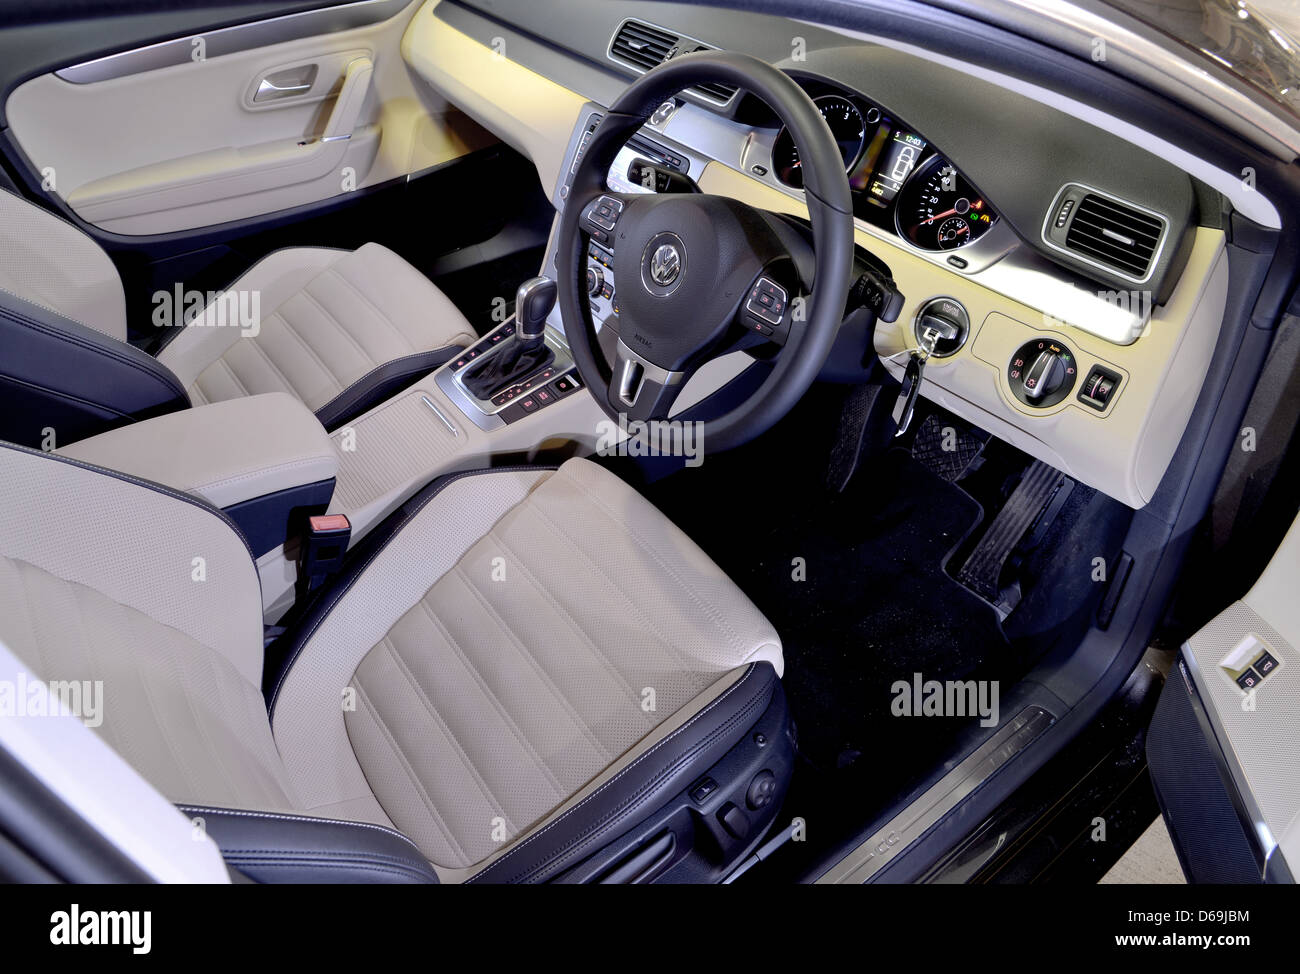 2012 2013 Vw Volkswagen Passat Cc Interior Stock Photo